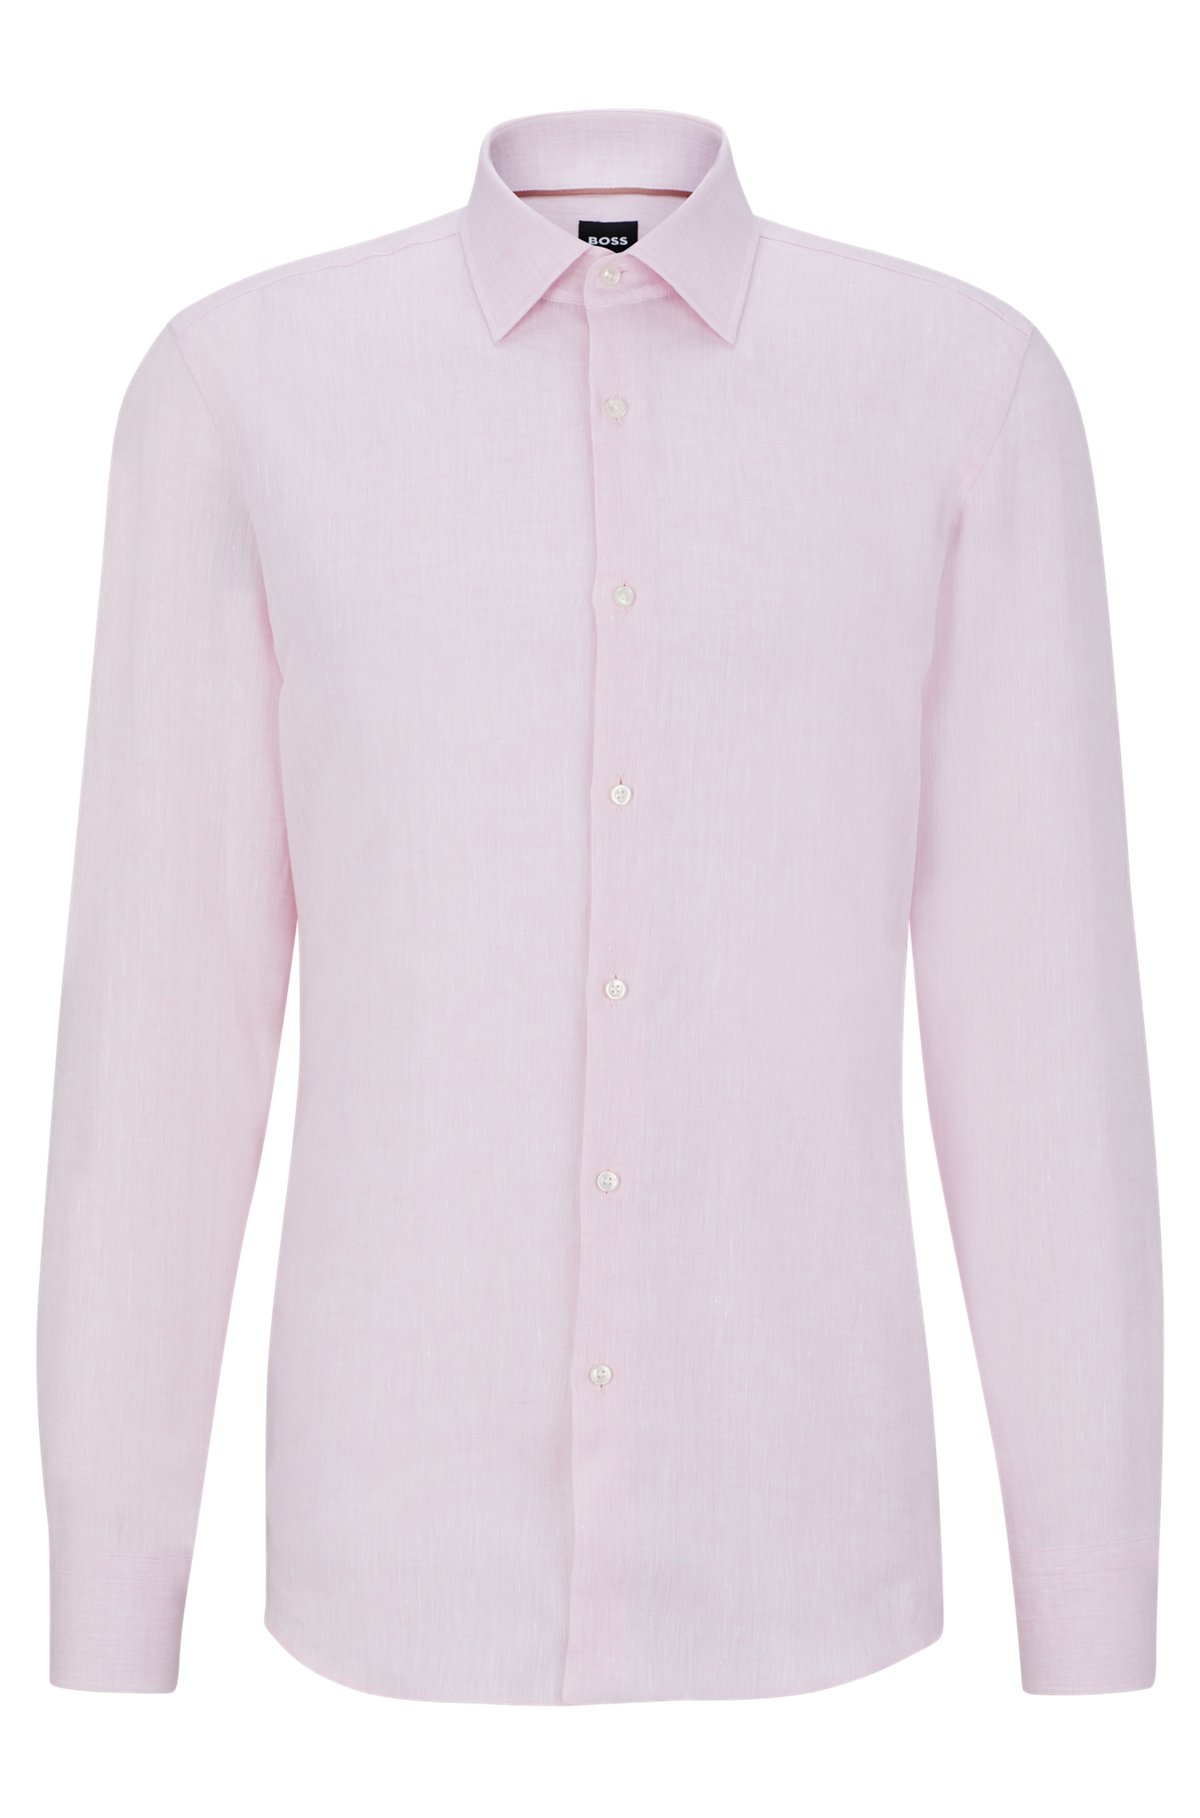 Slim-fit shirt in Italian linen, light pink